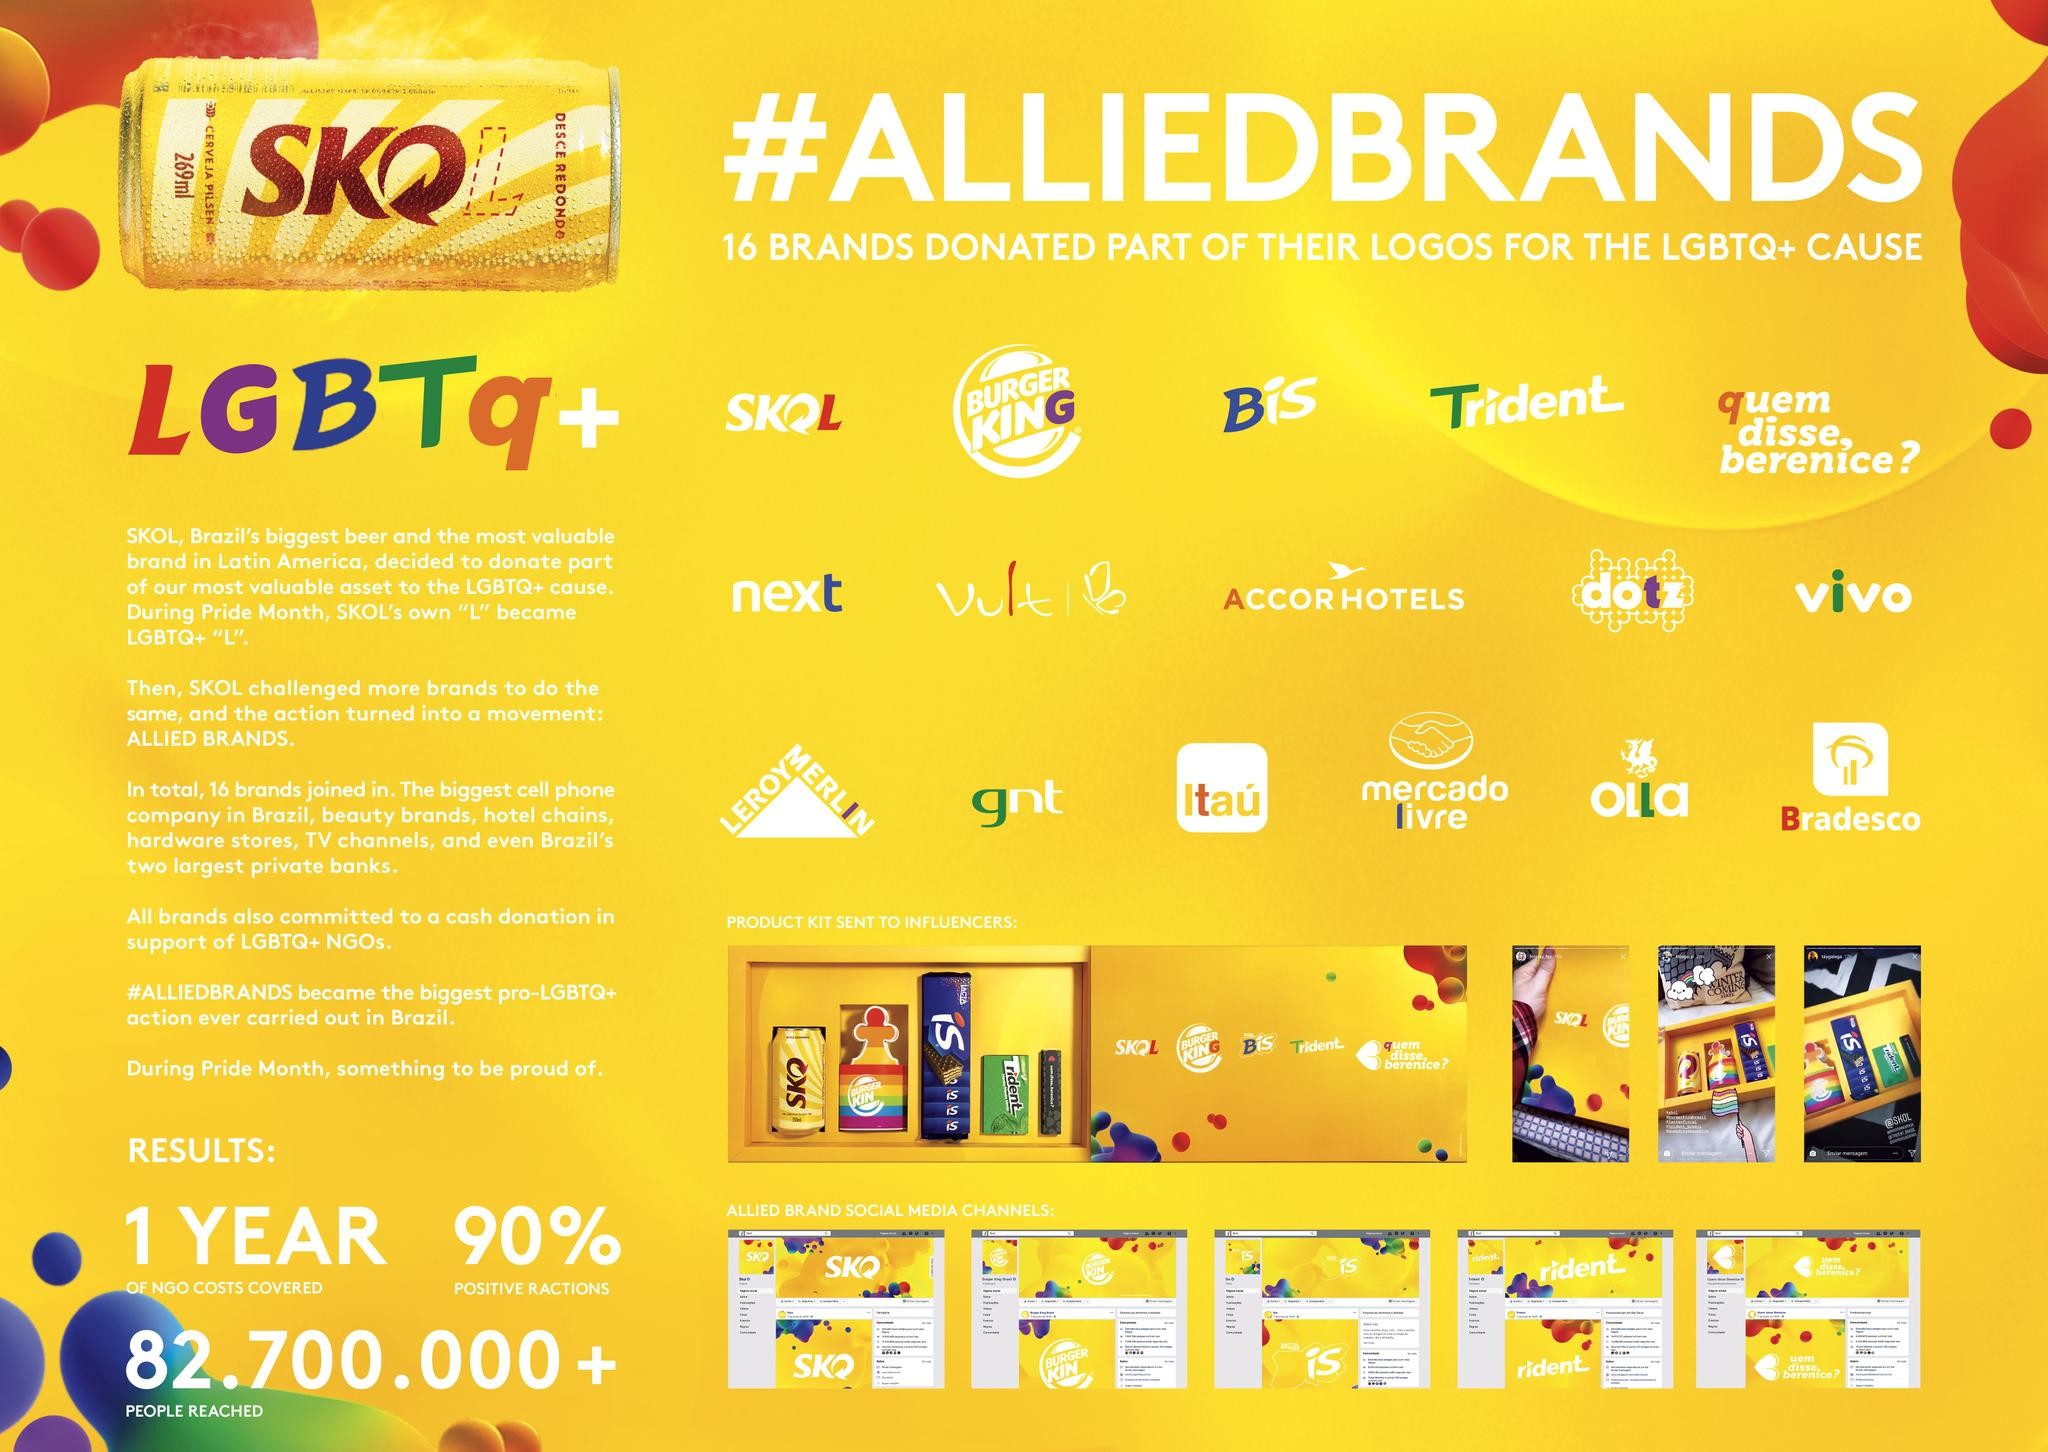 Allied Brands